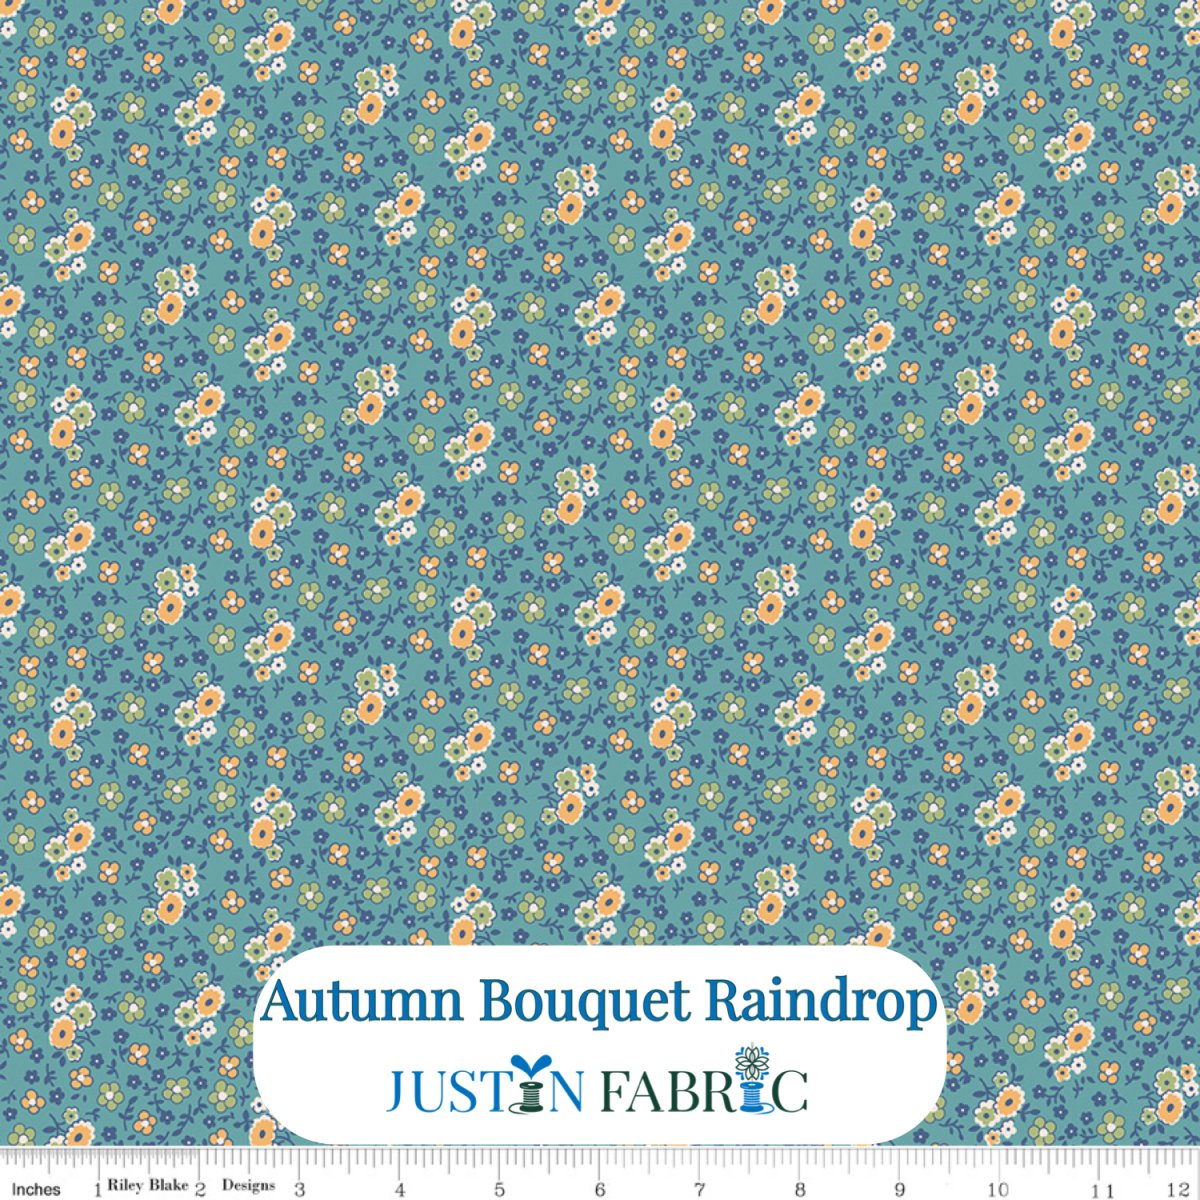 Autumn Bouquet Raindrop Cotton Yardage by Lori Holt | Riley Blake Designs -C14656-RAINDROP - Justin Fabric!